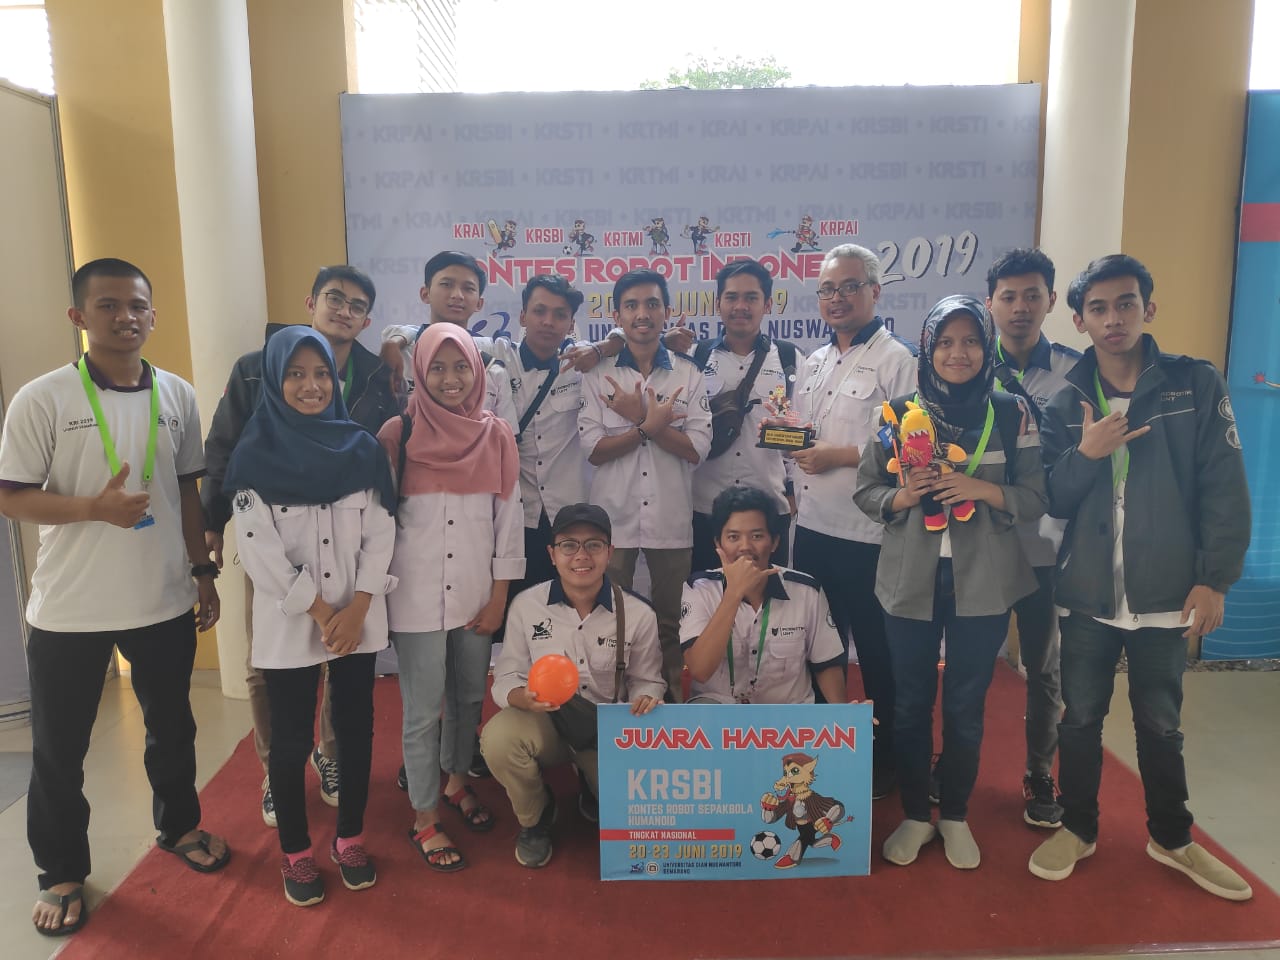 Foto Kontes Robot Indonesia 2019 - Nasional